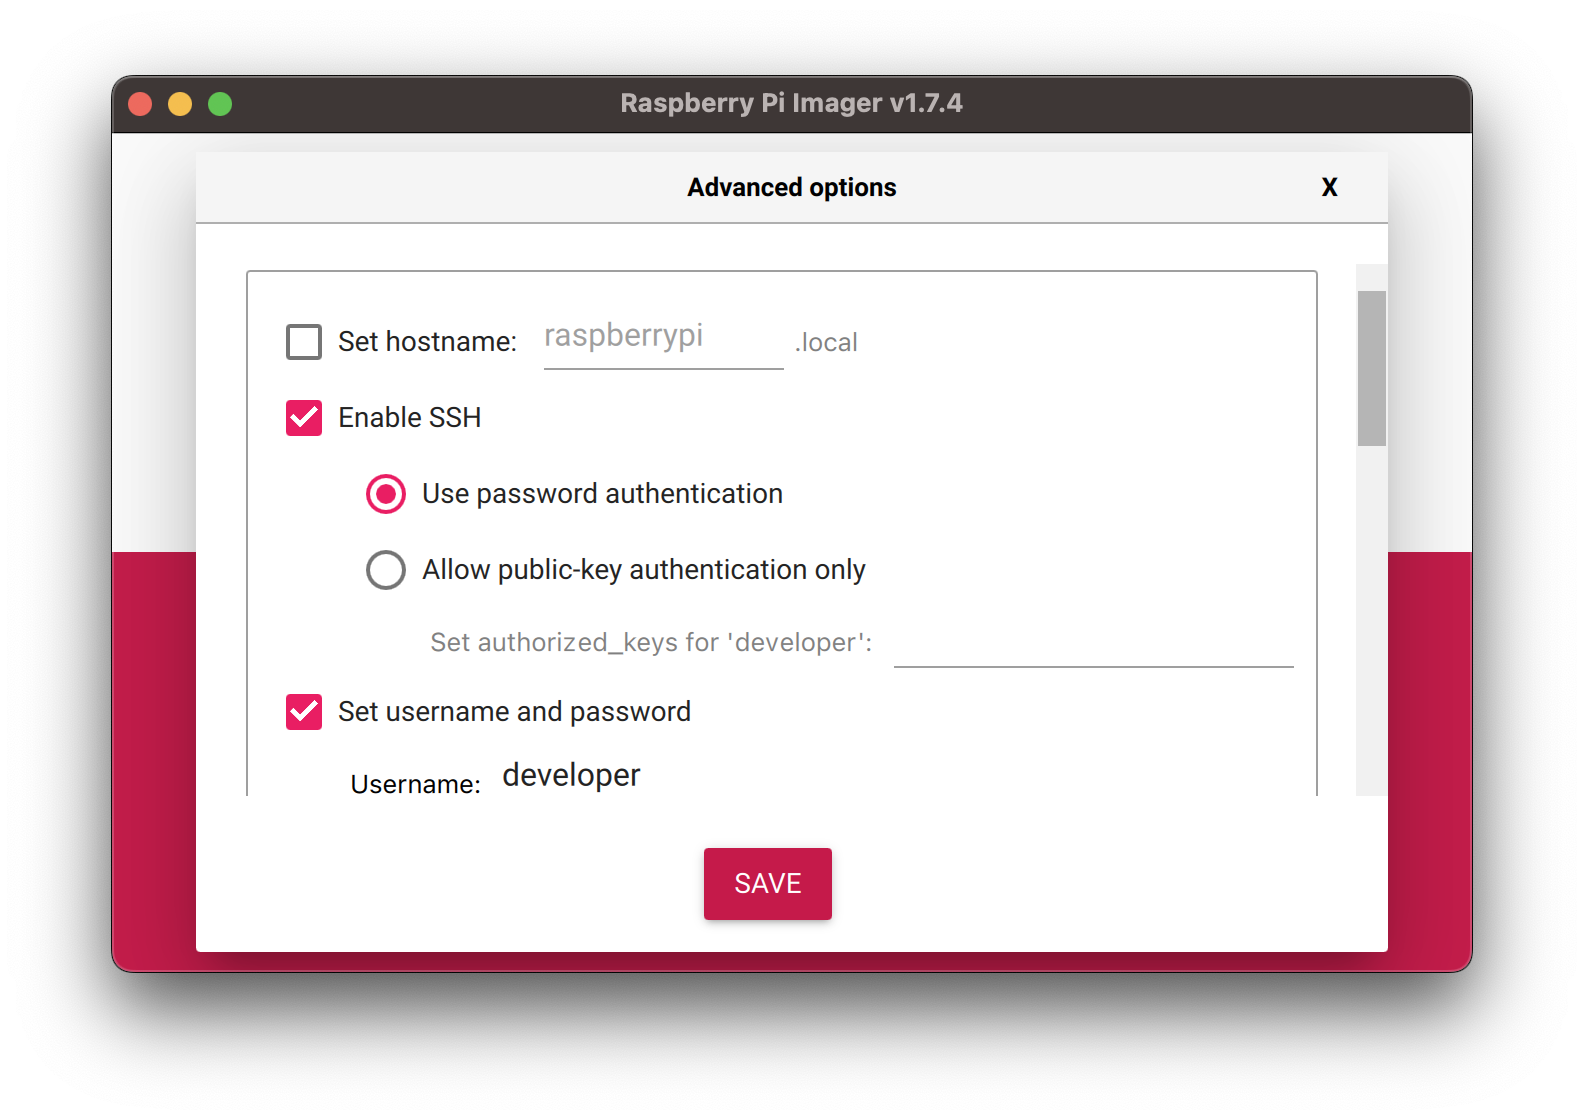 Screenshot of the Raspberry Pi Imager Advanced Options Menu